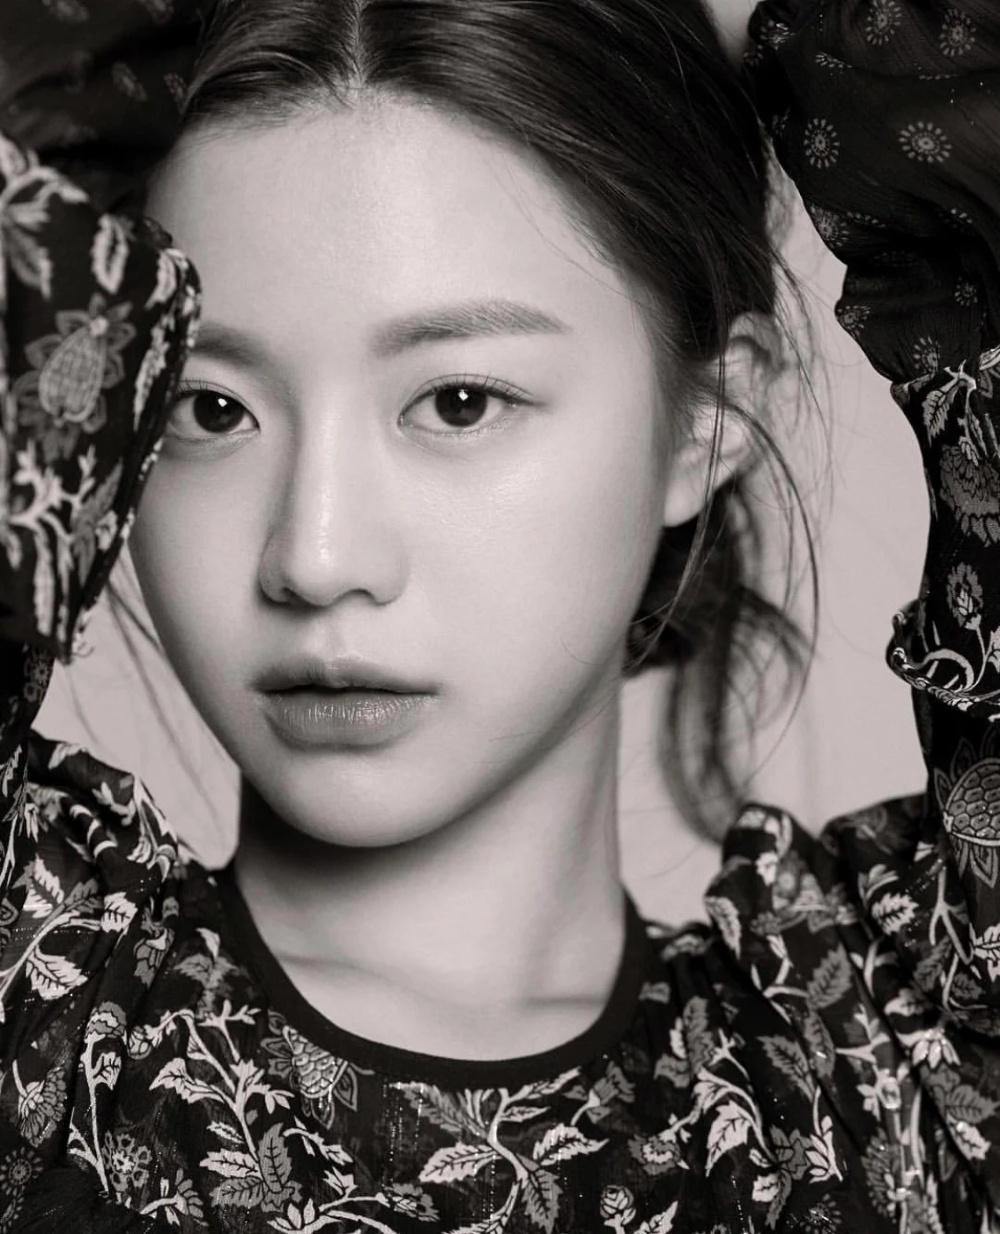 Go Yoon Jung (고윤정) HanCinema - The Korean Movie And Drama Database. Beauty Girl, Korean Beauty Girls, Portrait Girl